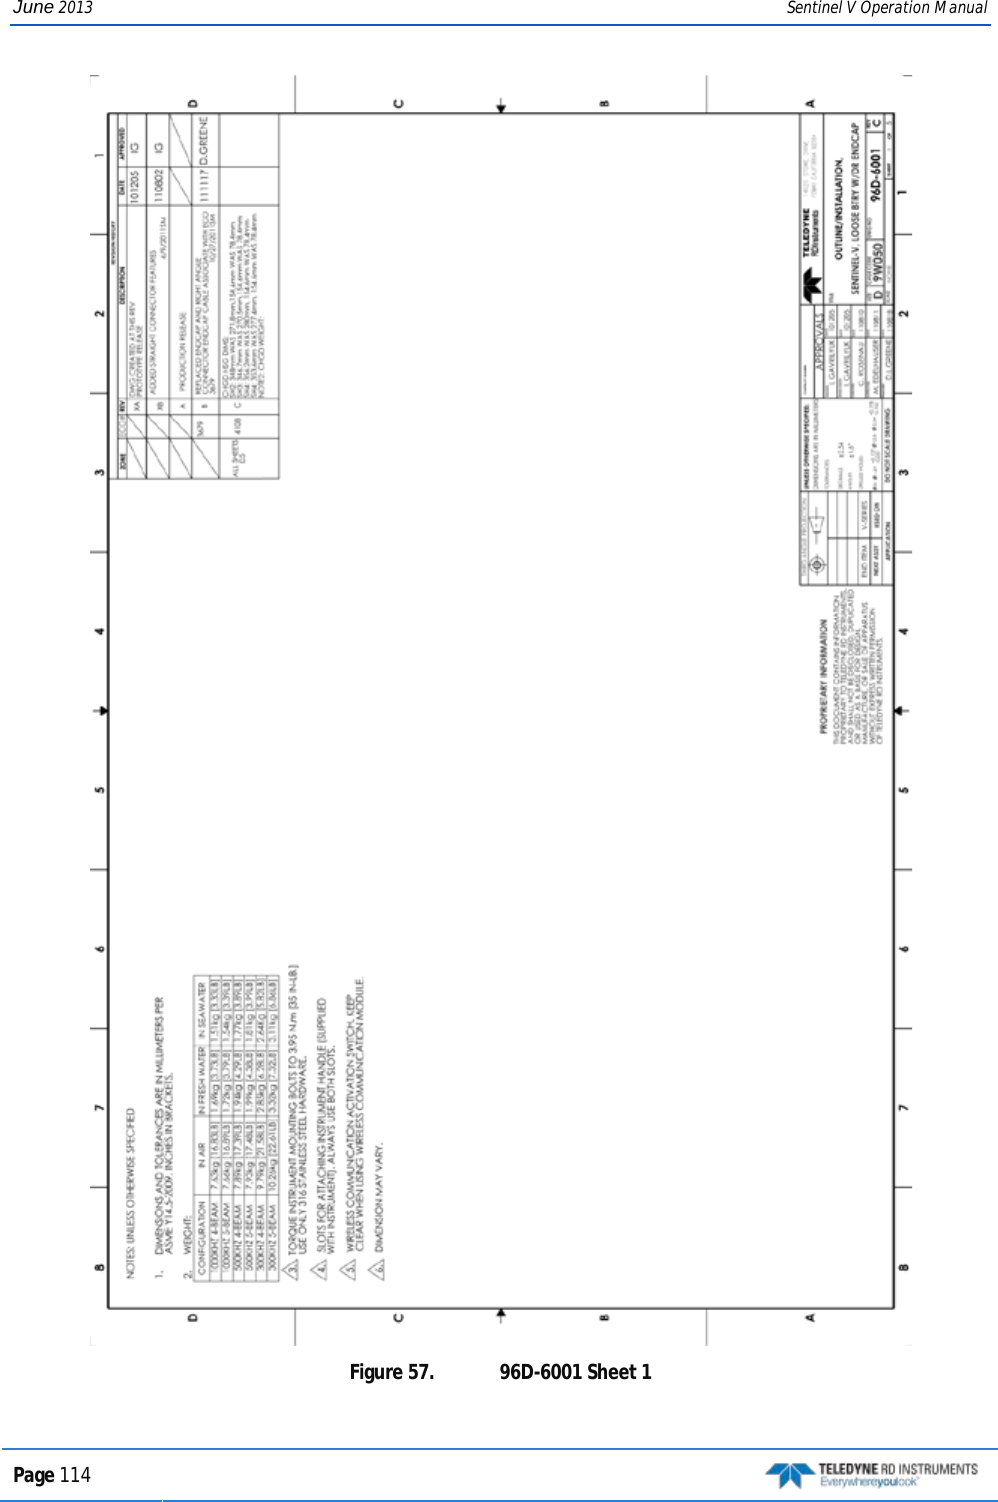 June 2013 Sentinel V Operation Manual  Figure 57.  96D-6001 Sheet 1 Page 114   